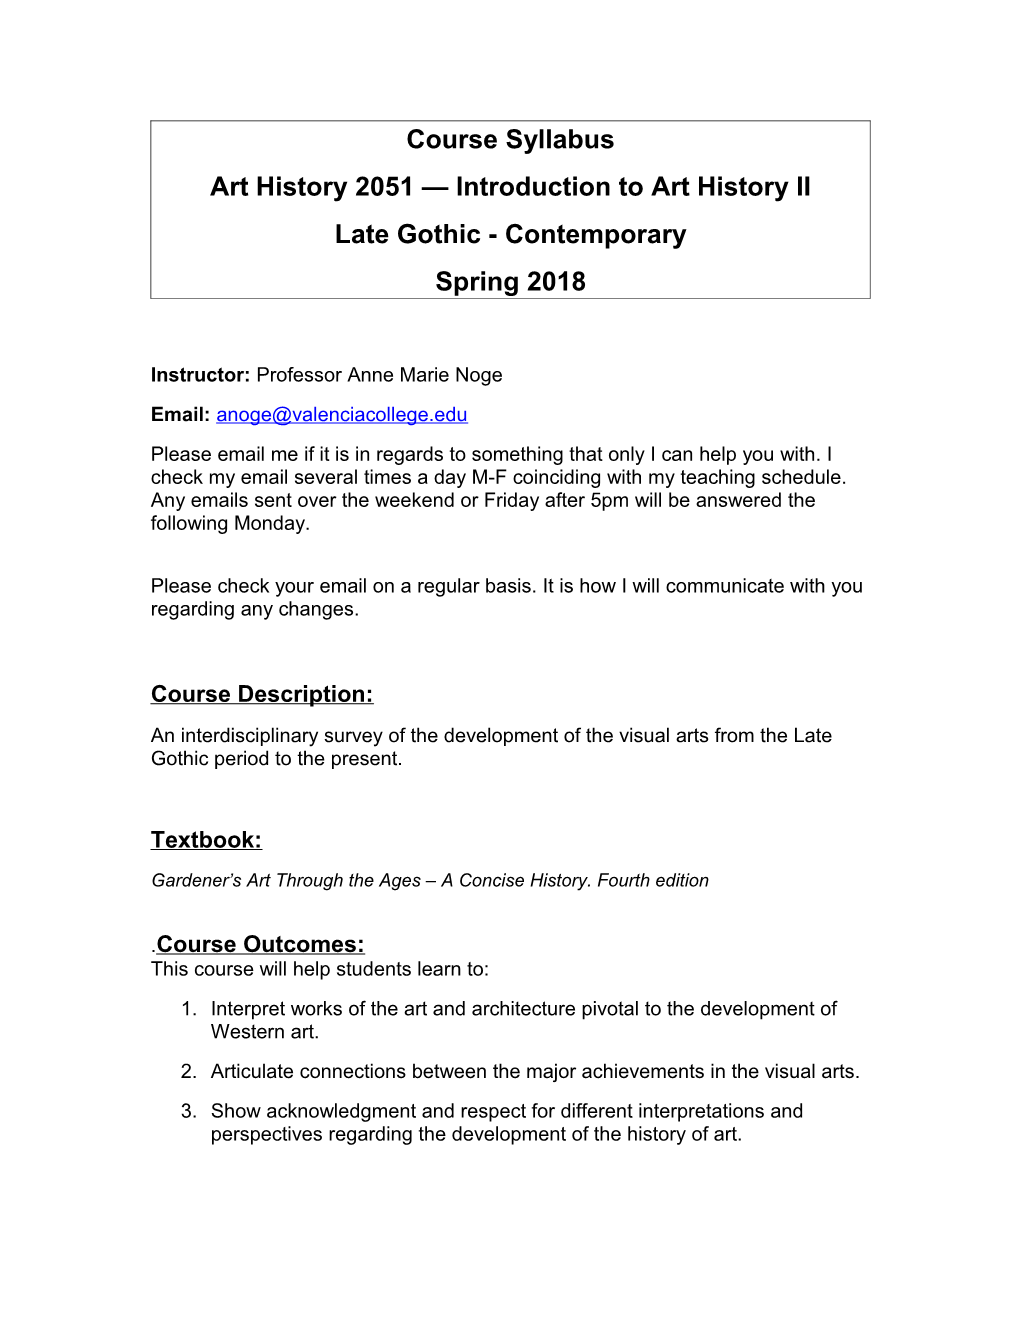 Art History 2051 Introduction to Art History II